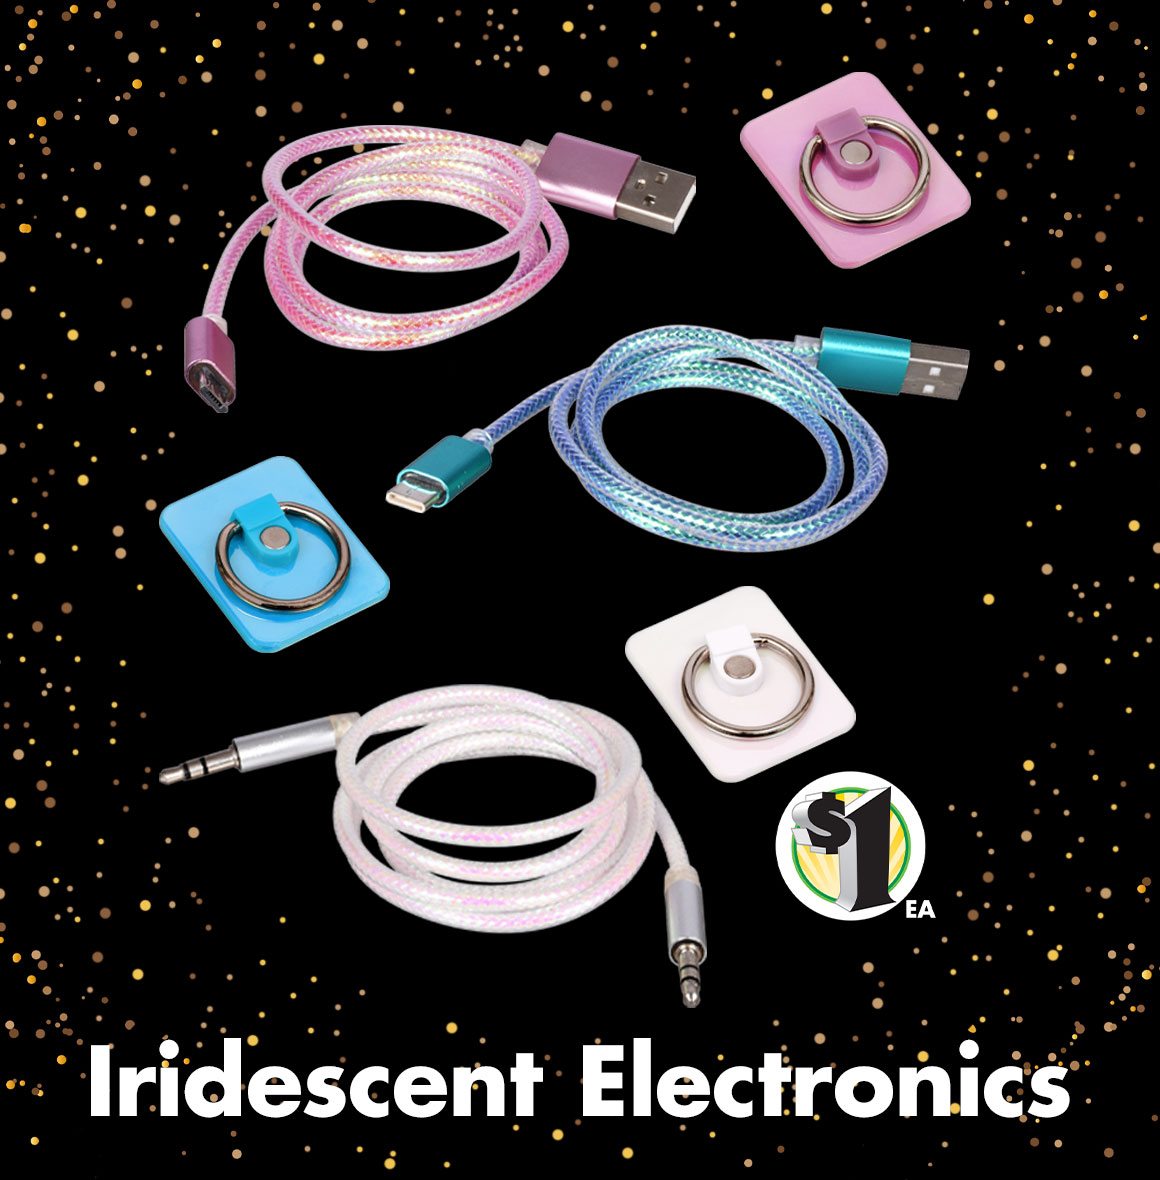 Shop $1 Iridescent Electronics!